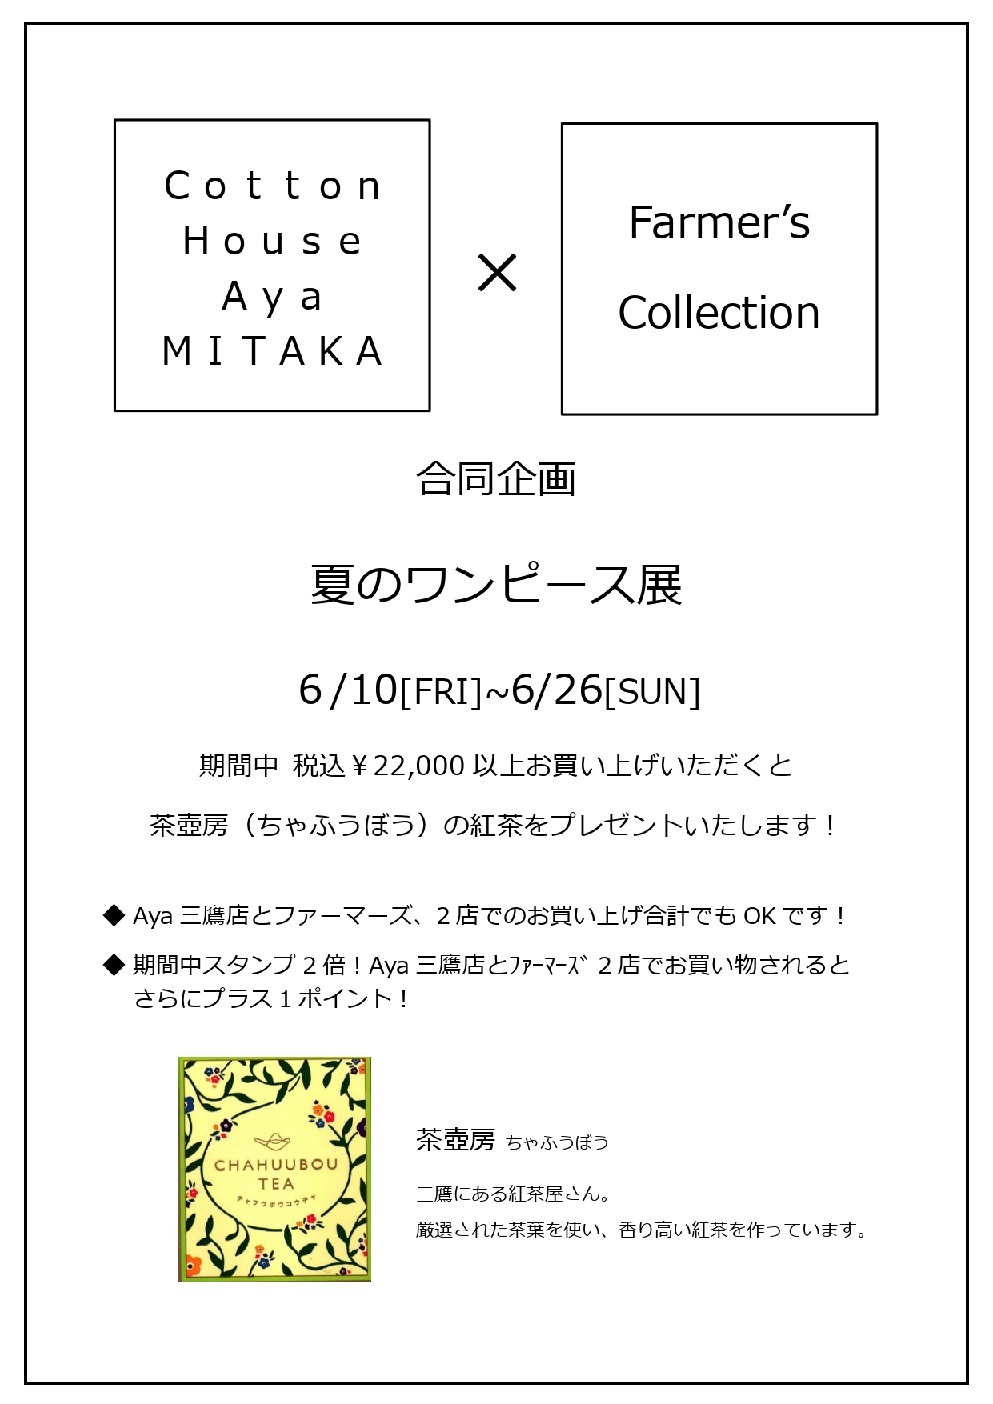 Cotton House Aya 三鷹店より_d0178718_15352770.jpg